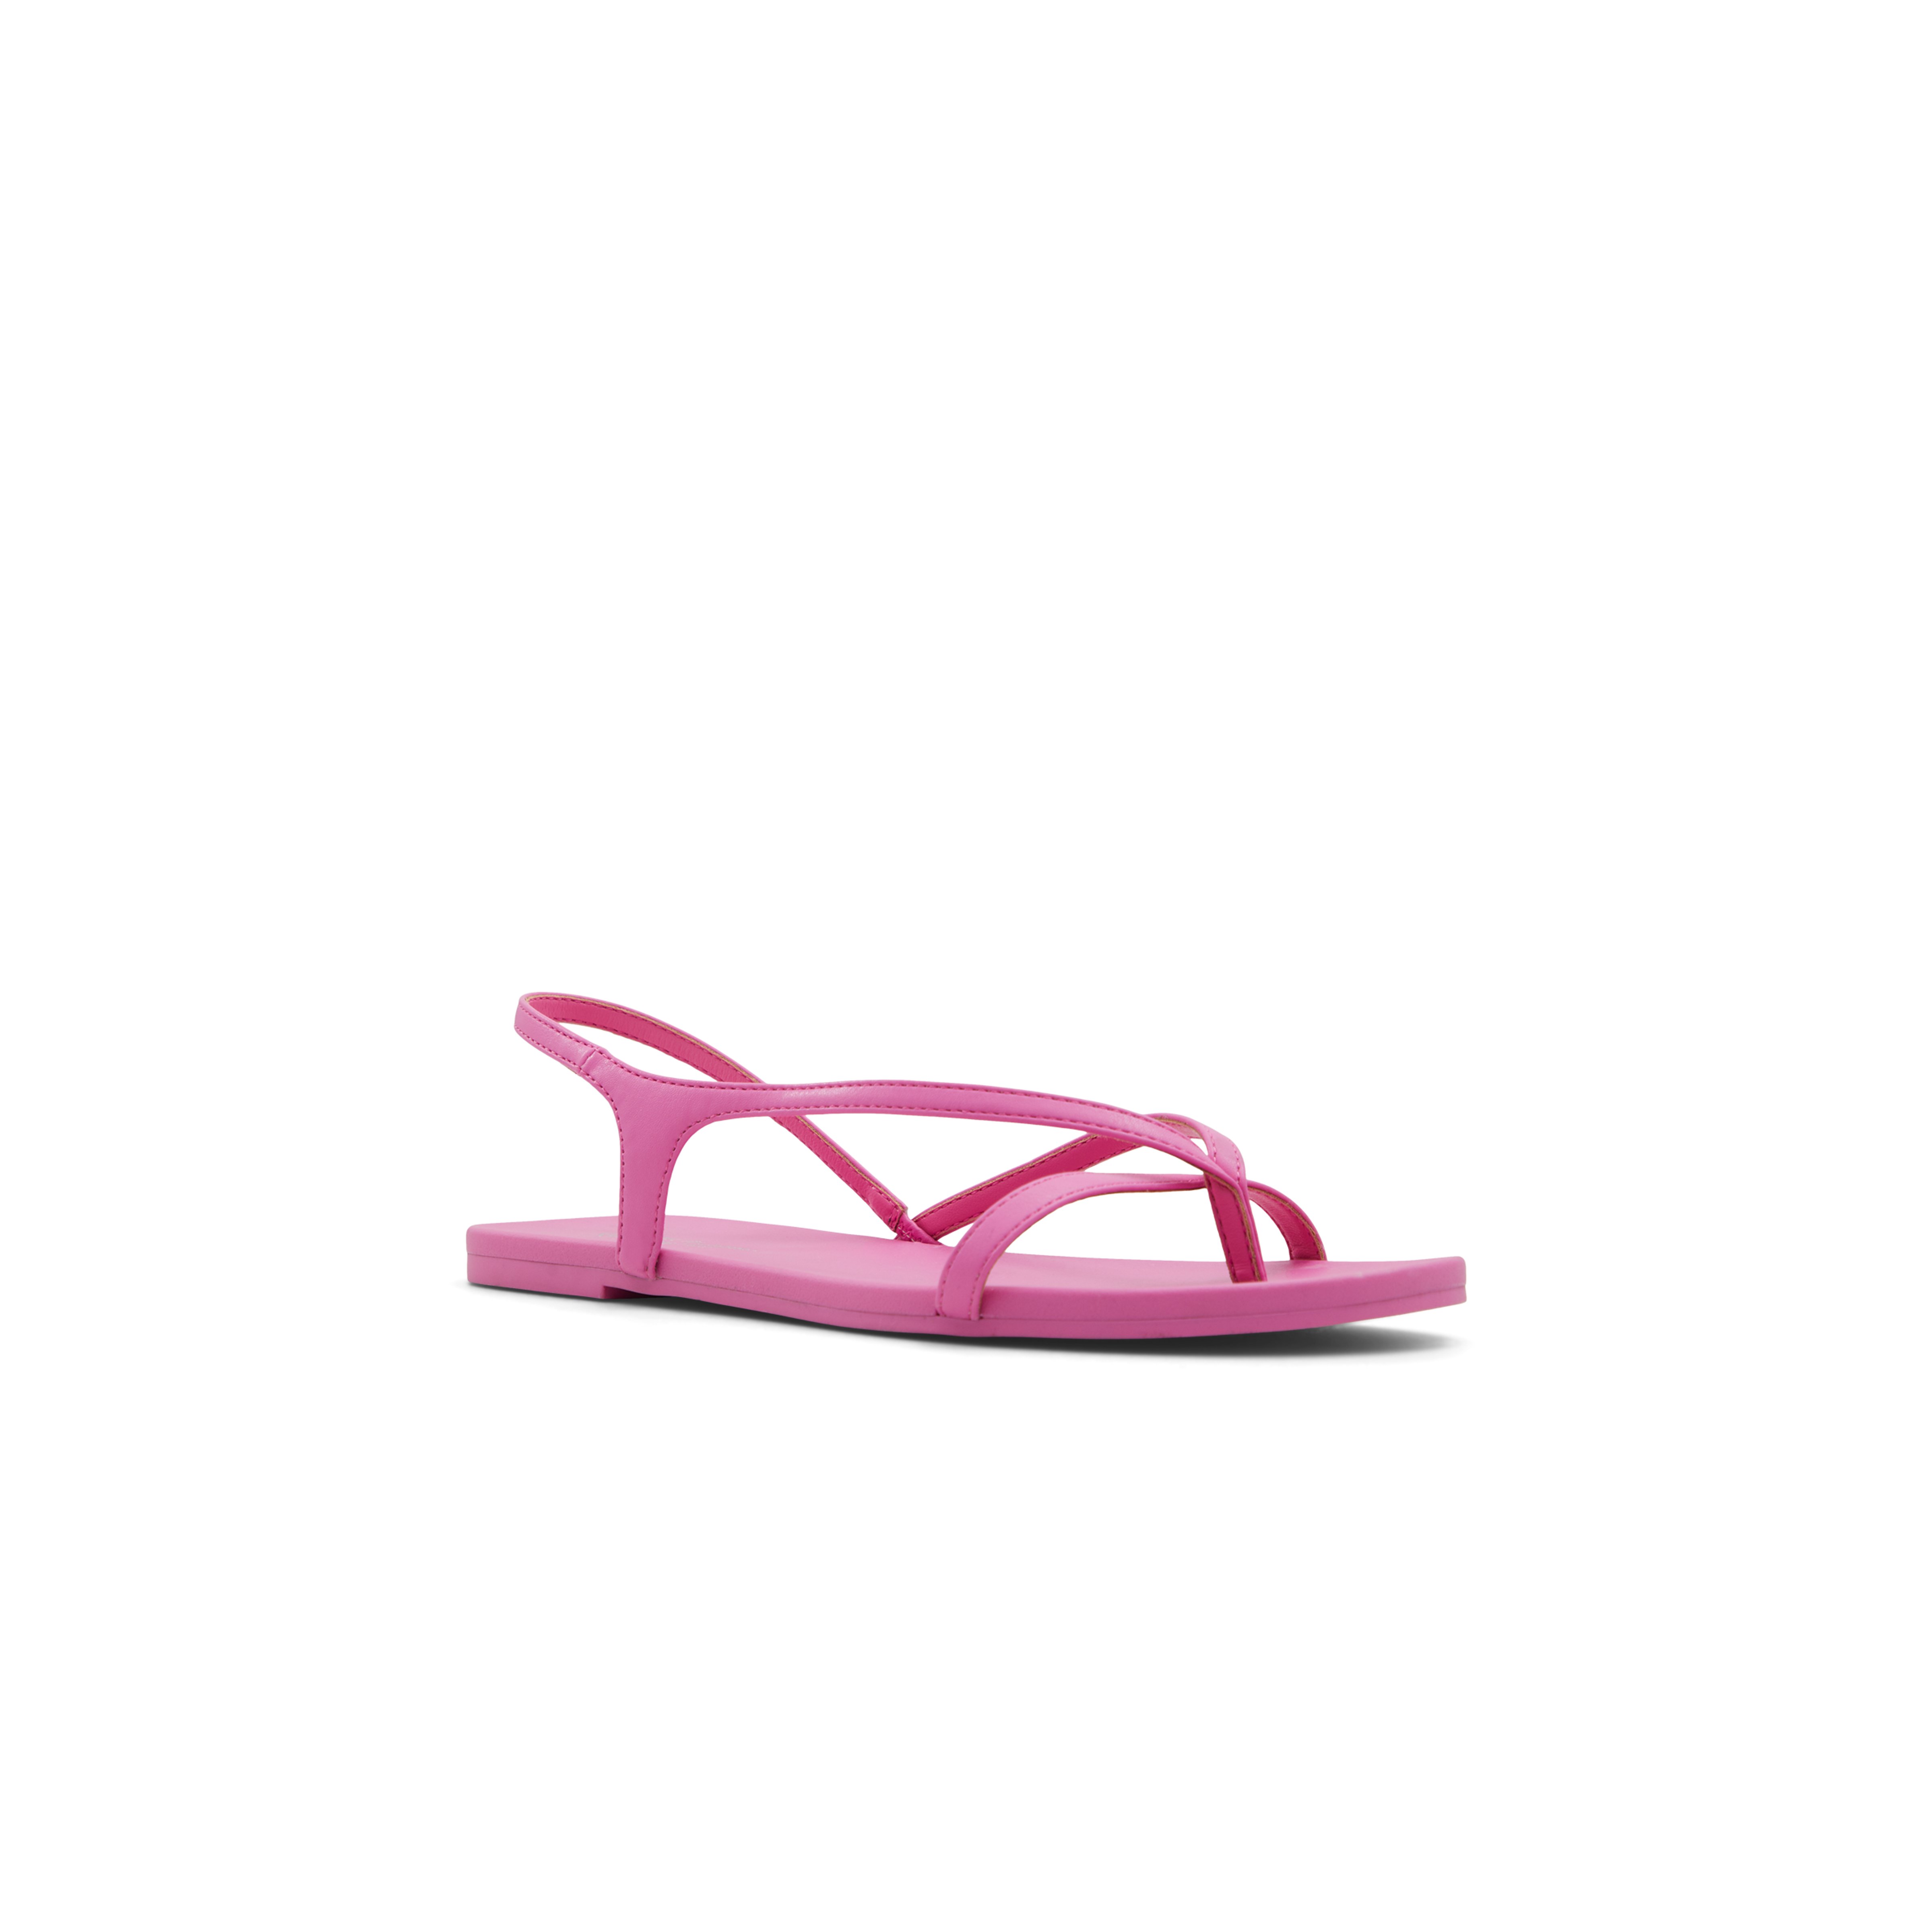 Montebello Women's Pink Flat Sandals image number 4